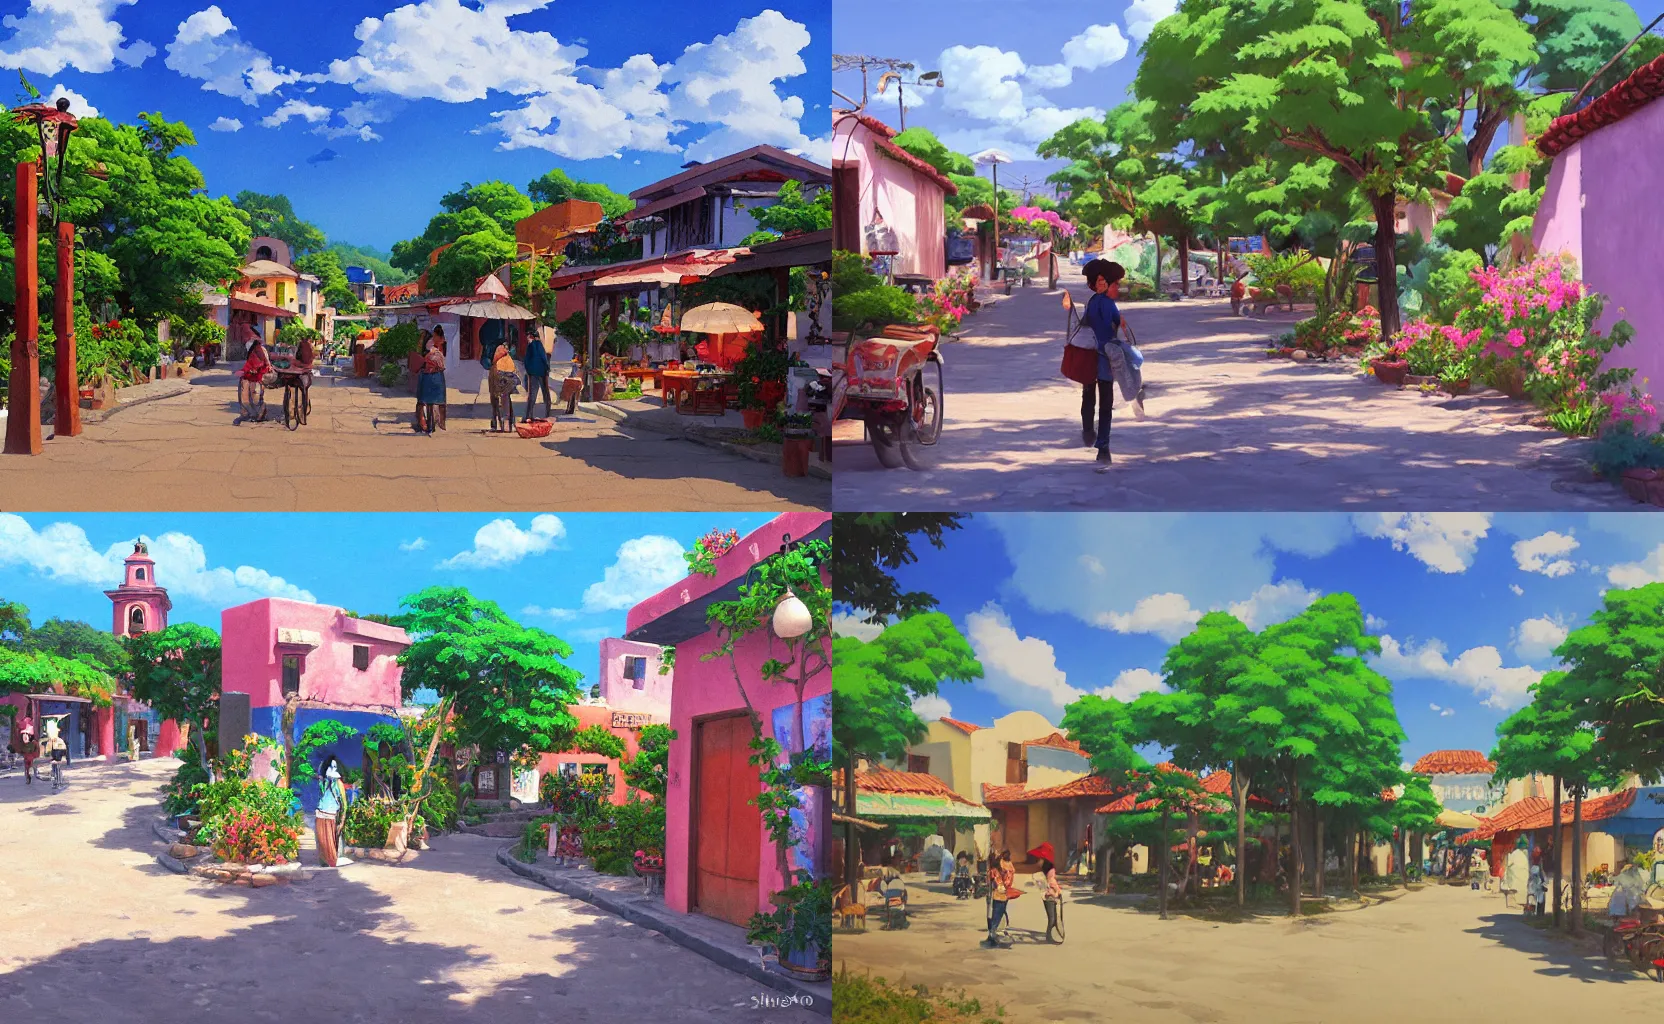 Prompt: a quaint rural Mexican town, painting by Makoto Shinkai